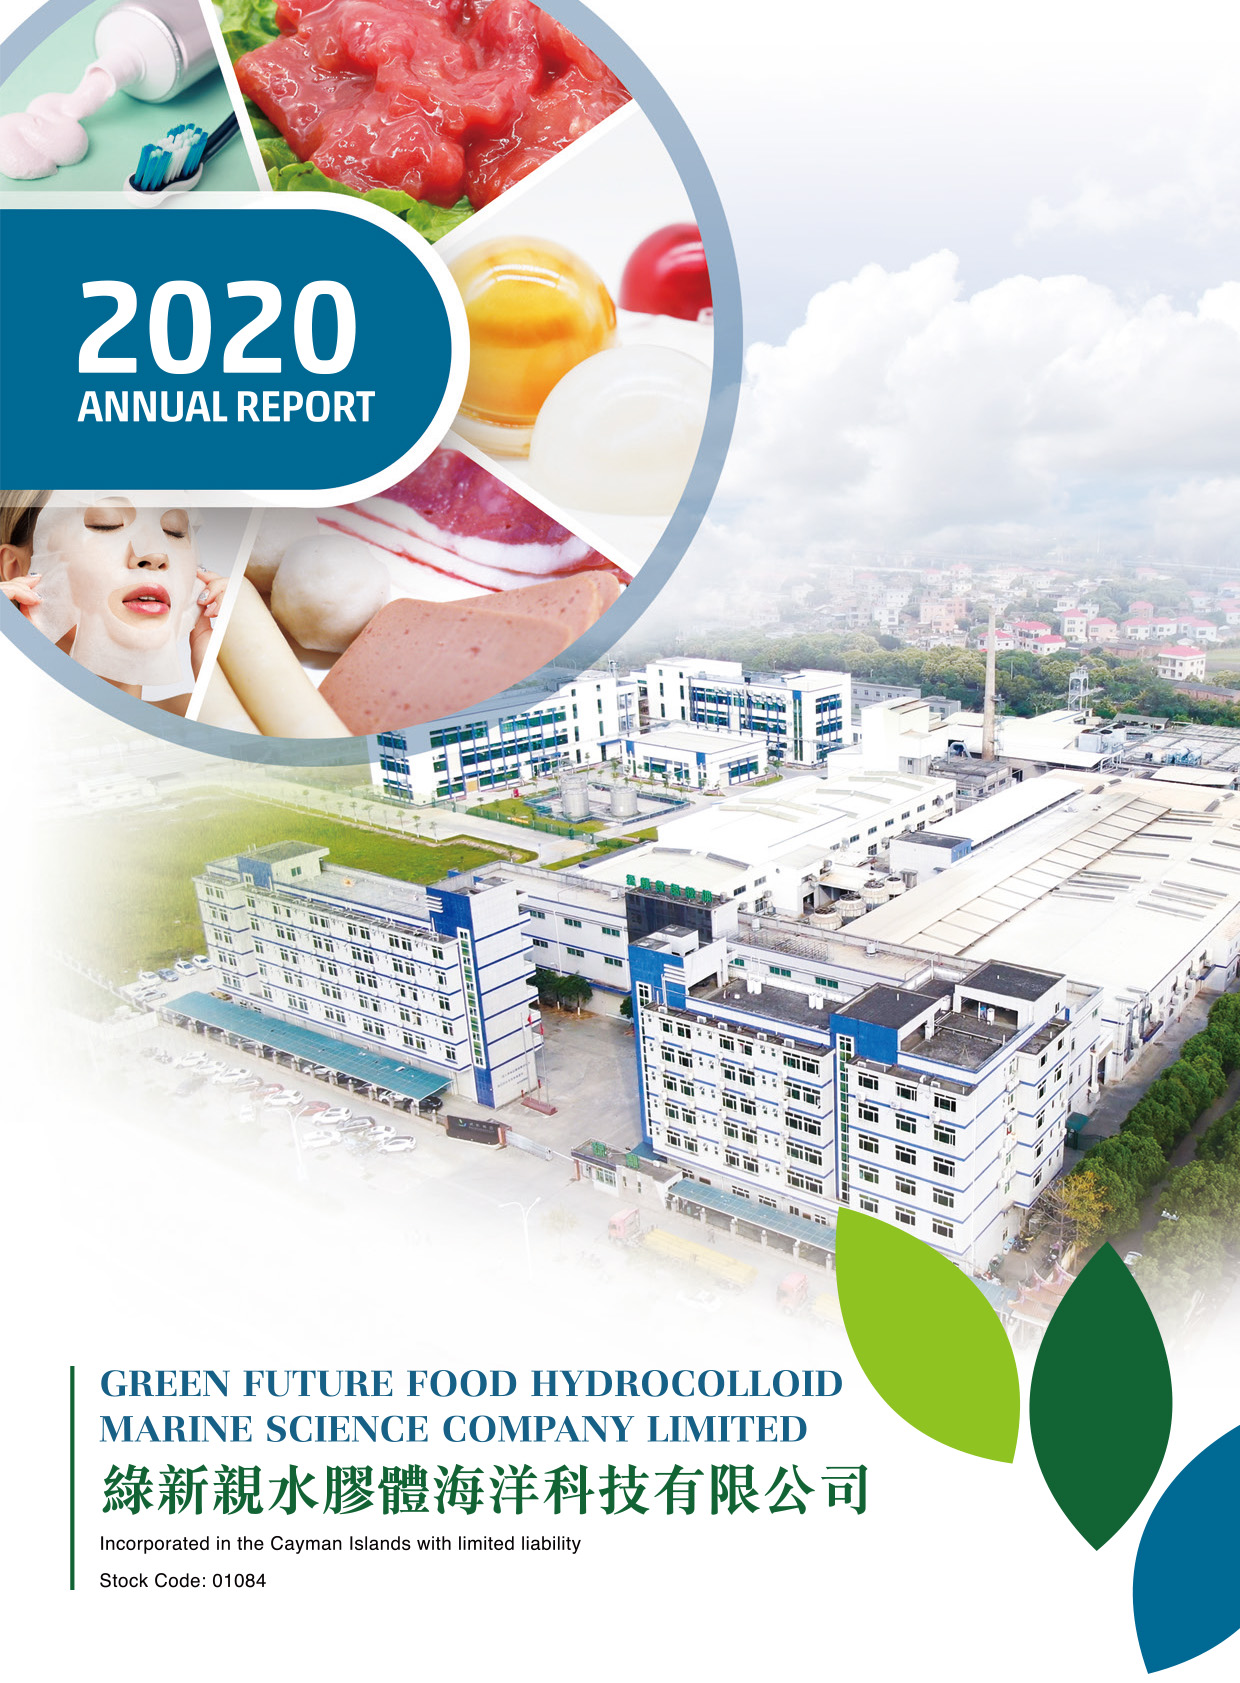 Green Future Food Hydrocolloid Marine Science Company Limited